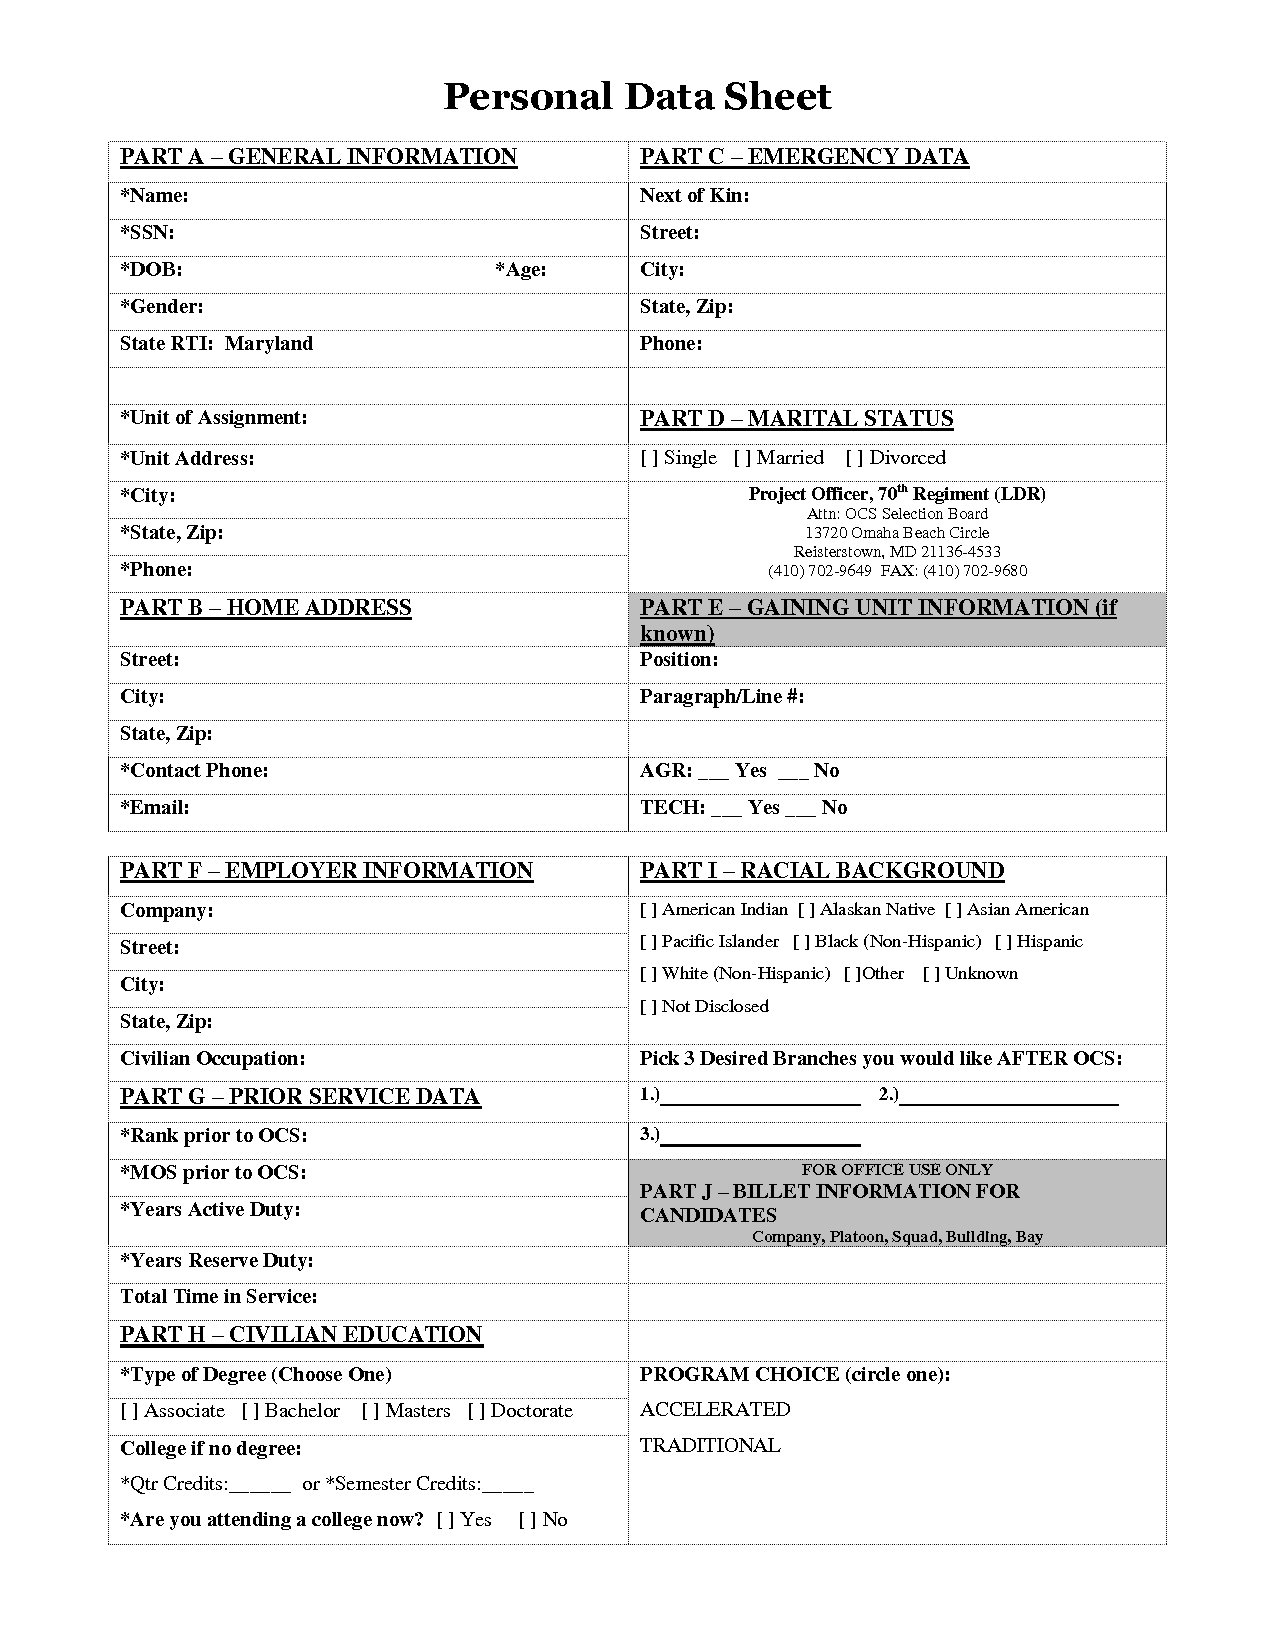 Personal Data Sheet Form Images - Personal Information Sheet | Nuhu - Free Printable Data Sheets